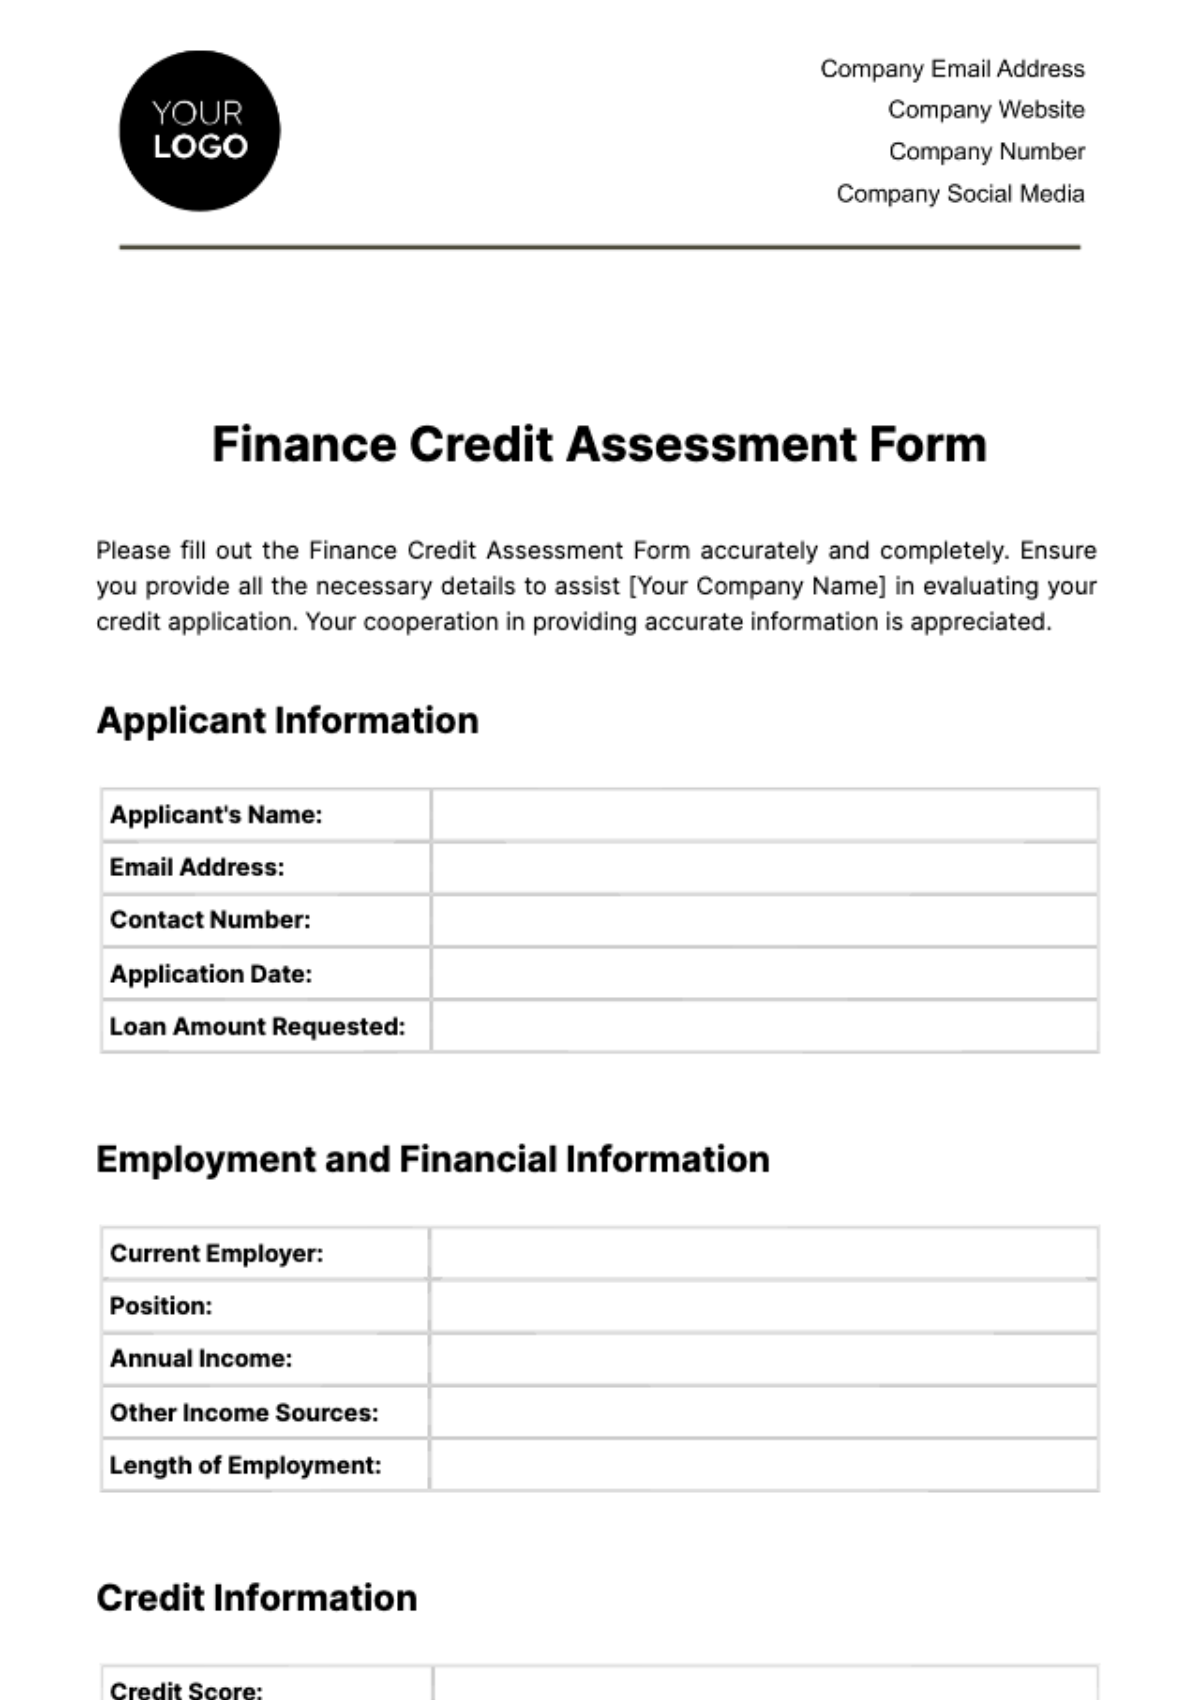 Finance Credit Assessment Form Template